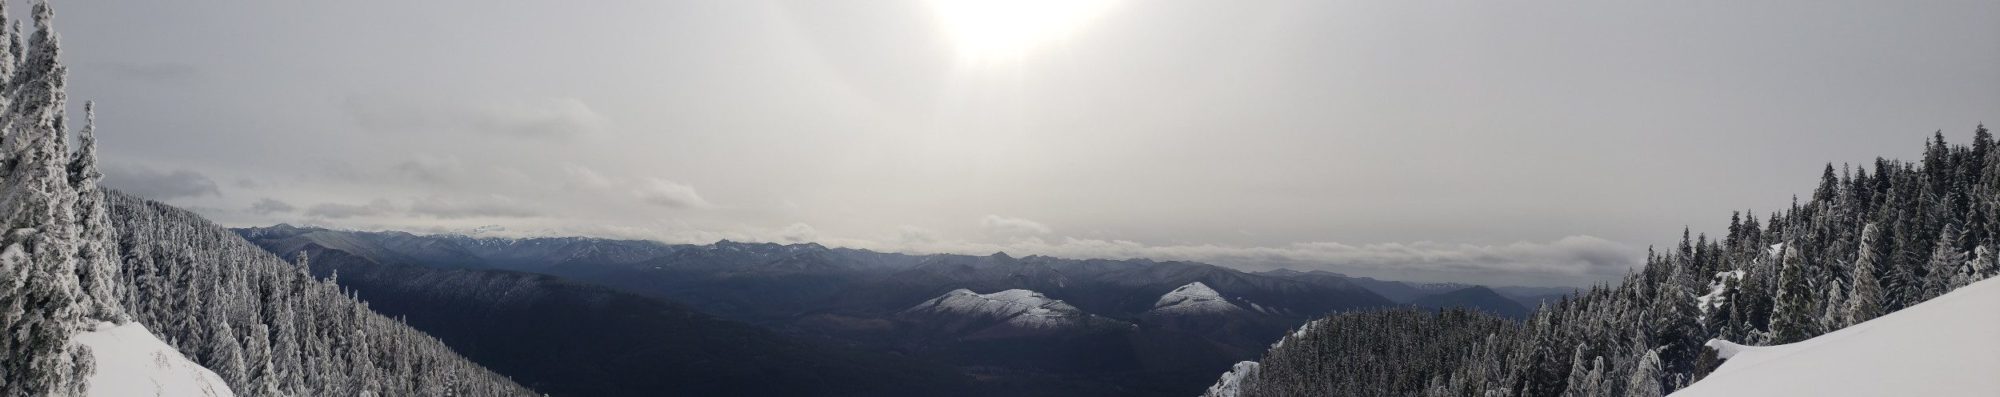 muller ridge summit panorama